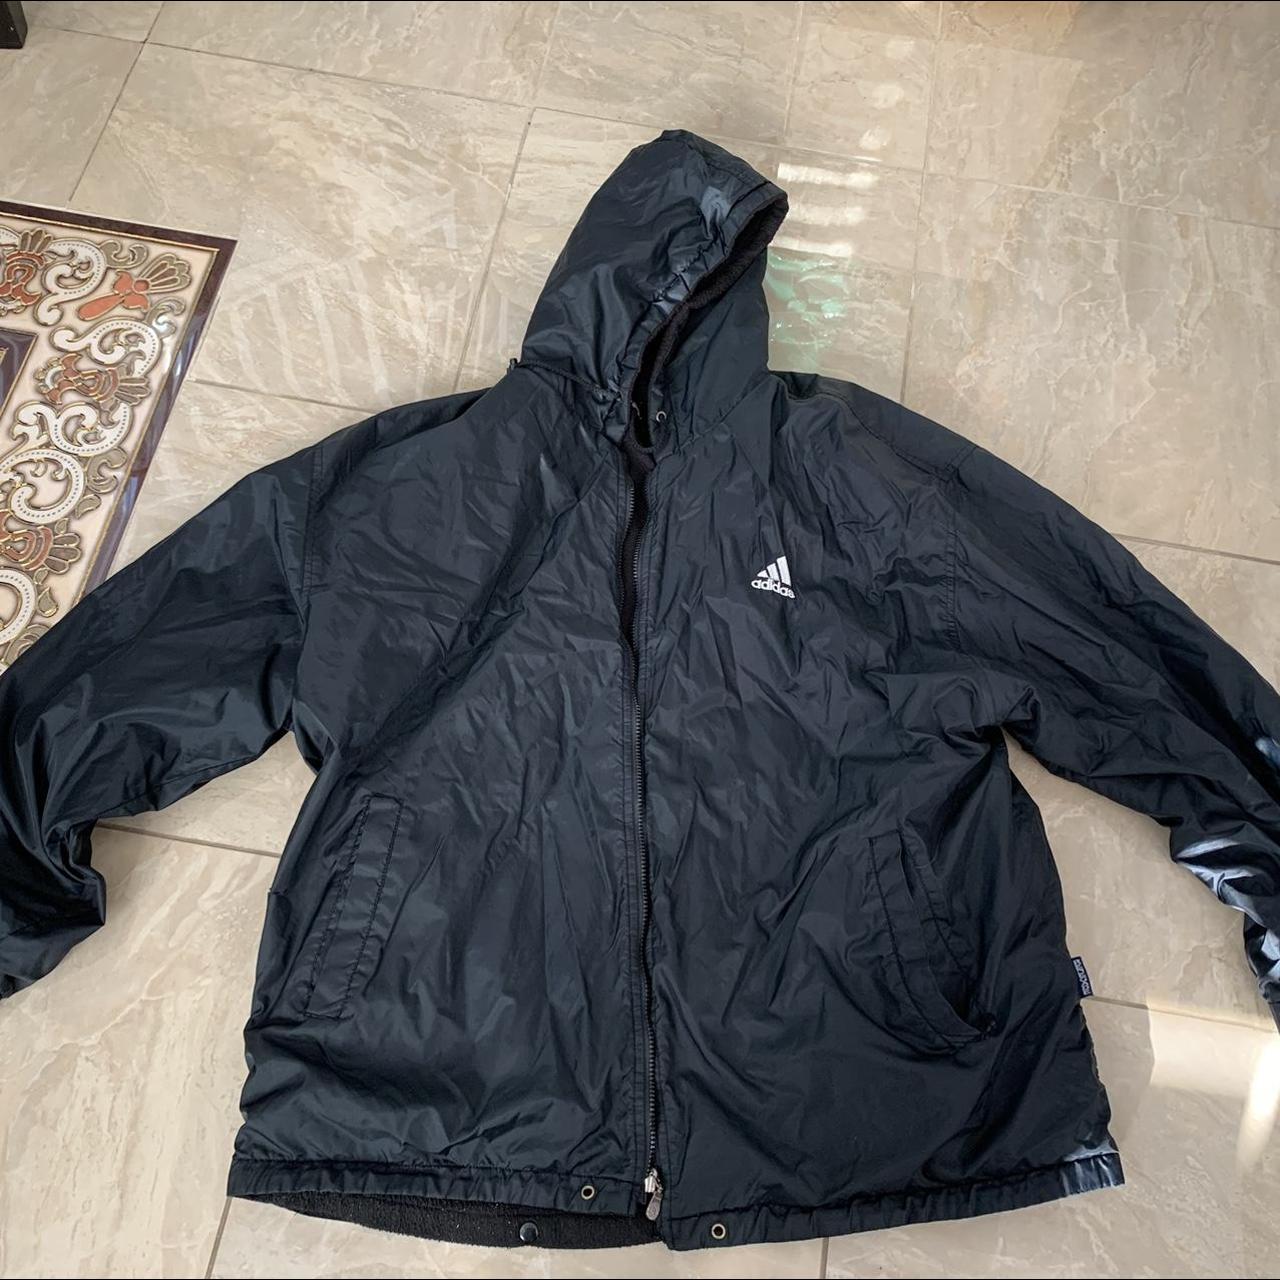 Renegade black vintage jacket size 2XL Has a small... - Depop